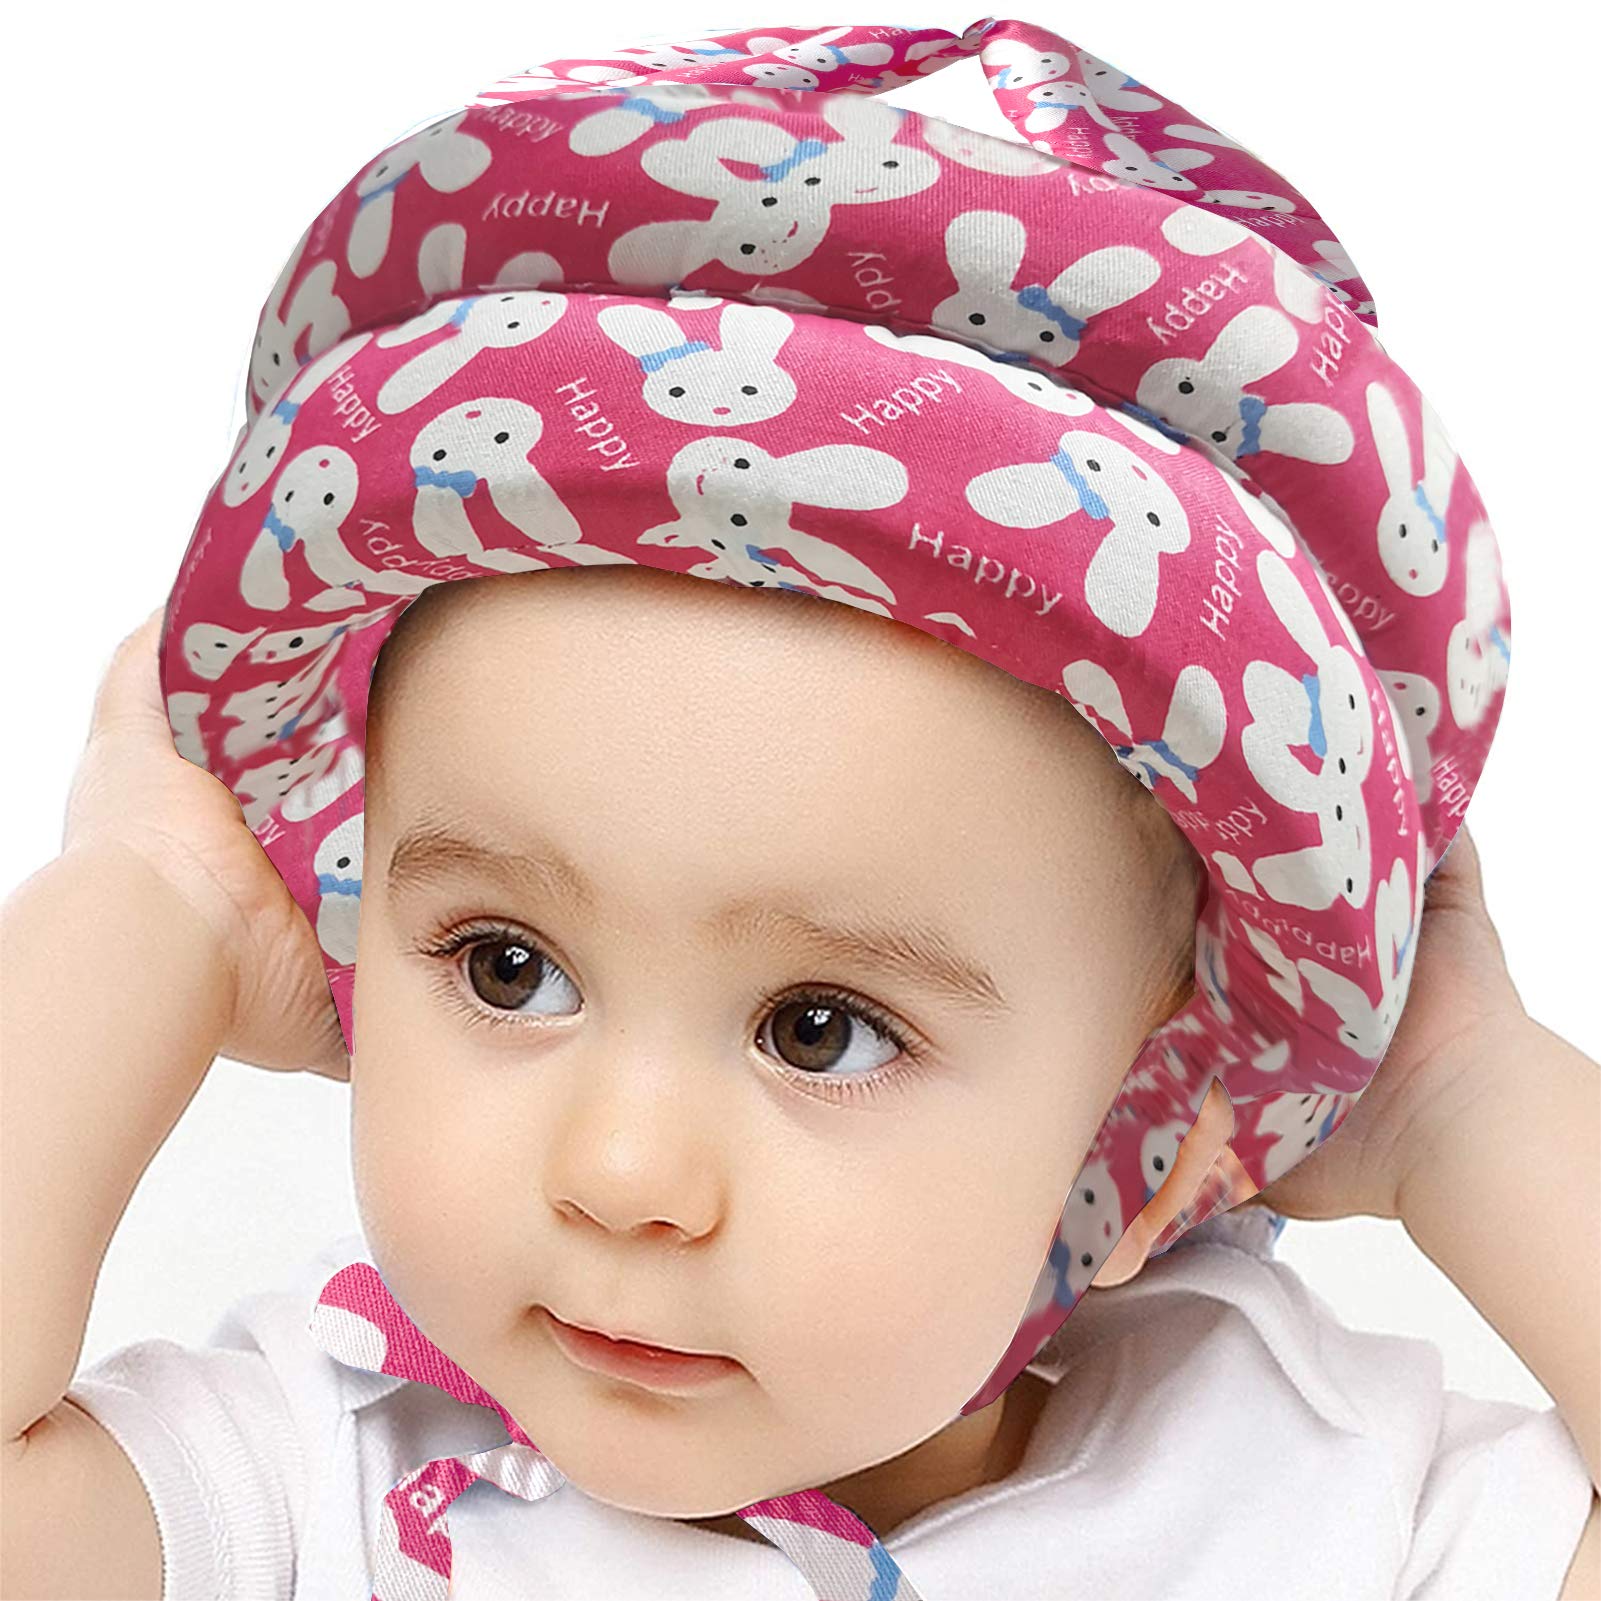 IULONEE Baby Infant Toddler Helmet No Bump Safety Head Cushion Bumper Bonnet Adjustable Protective Cap Child Safety Headguard Ha